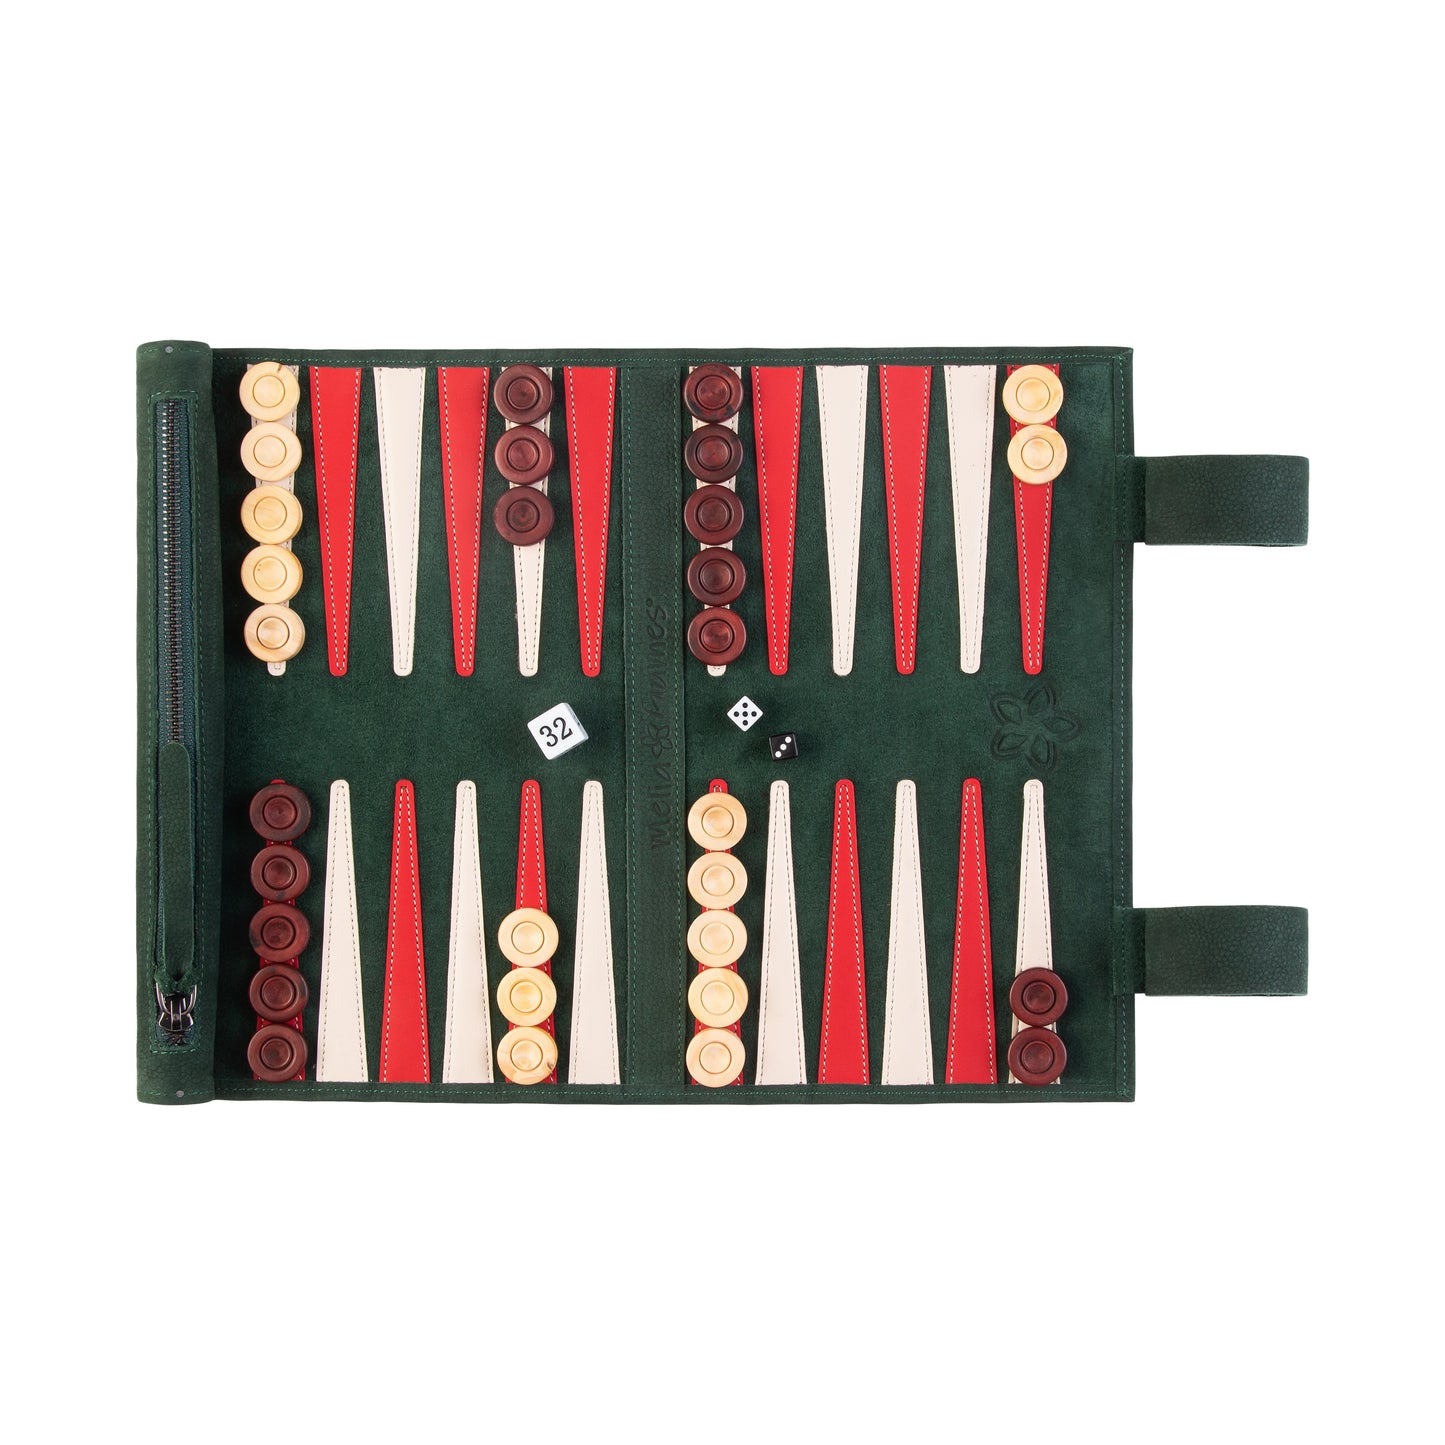 Roll up Leather Backgammon Set - Bella Italia - Full Leather Travel Version